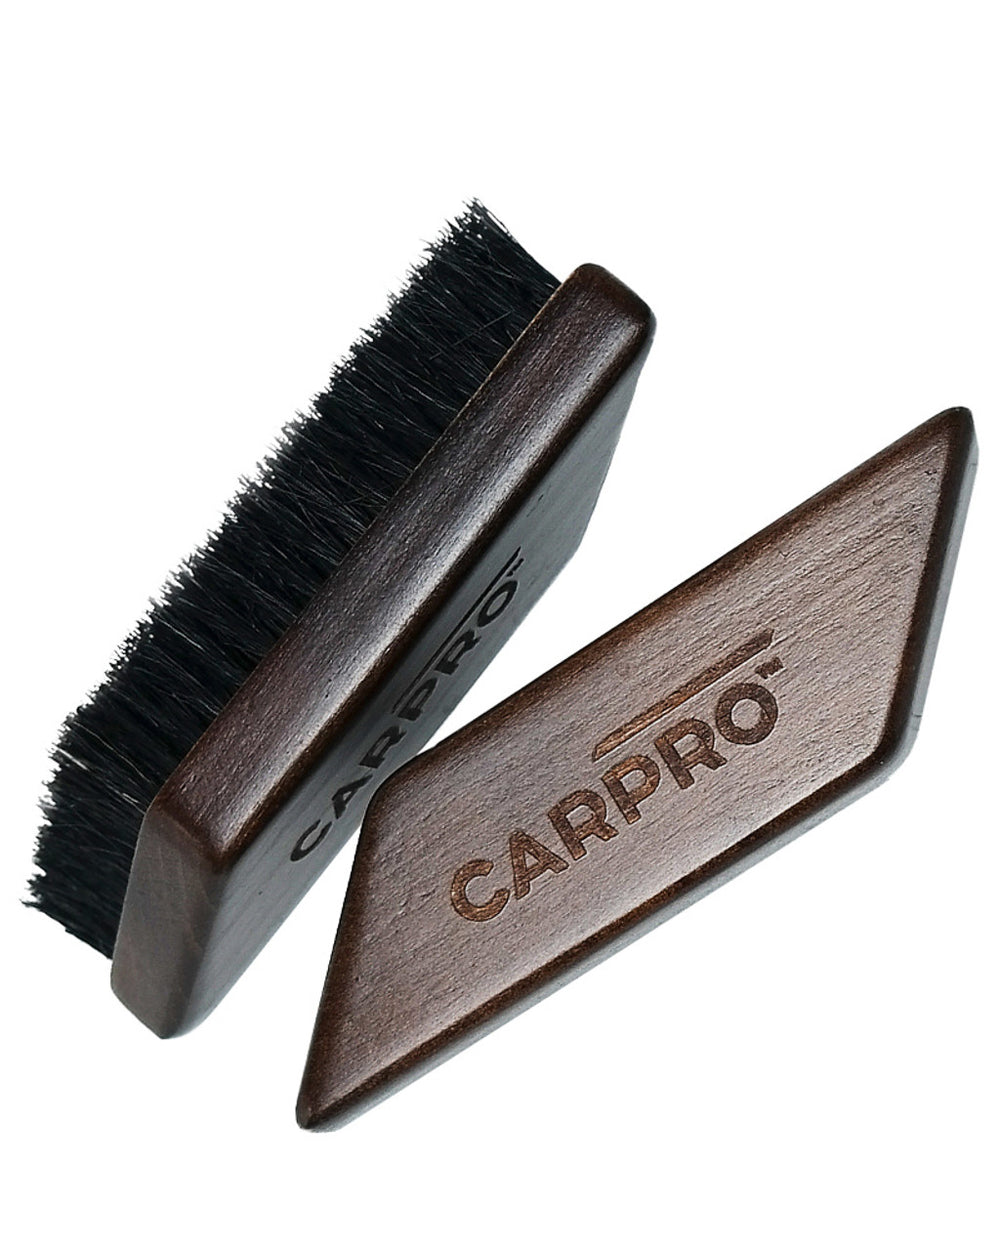 CARPRO - Small Leather Brush